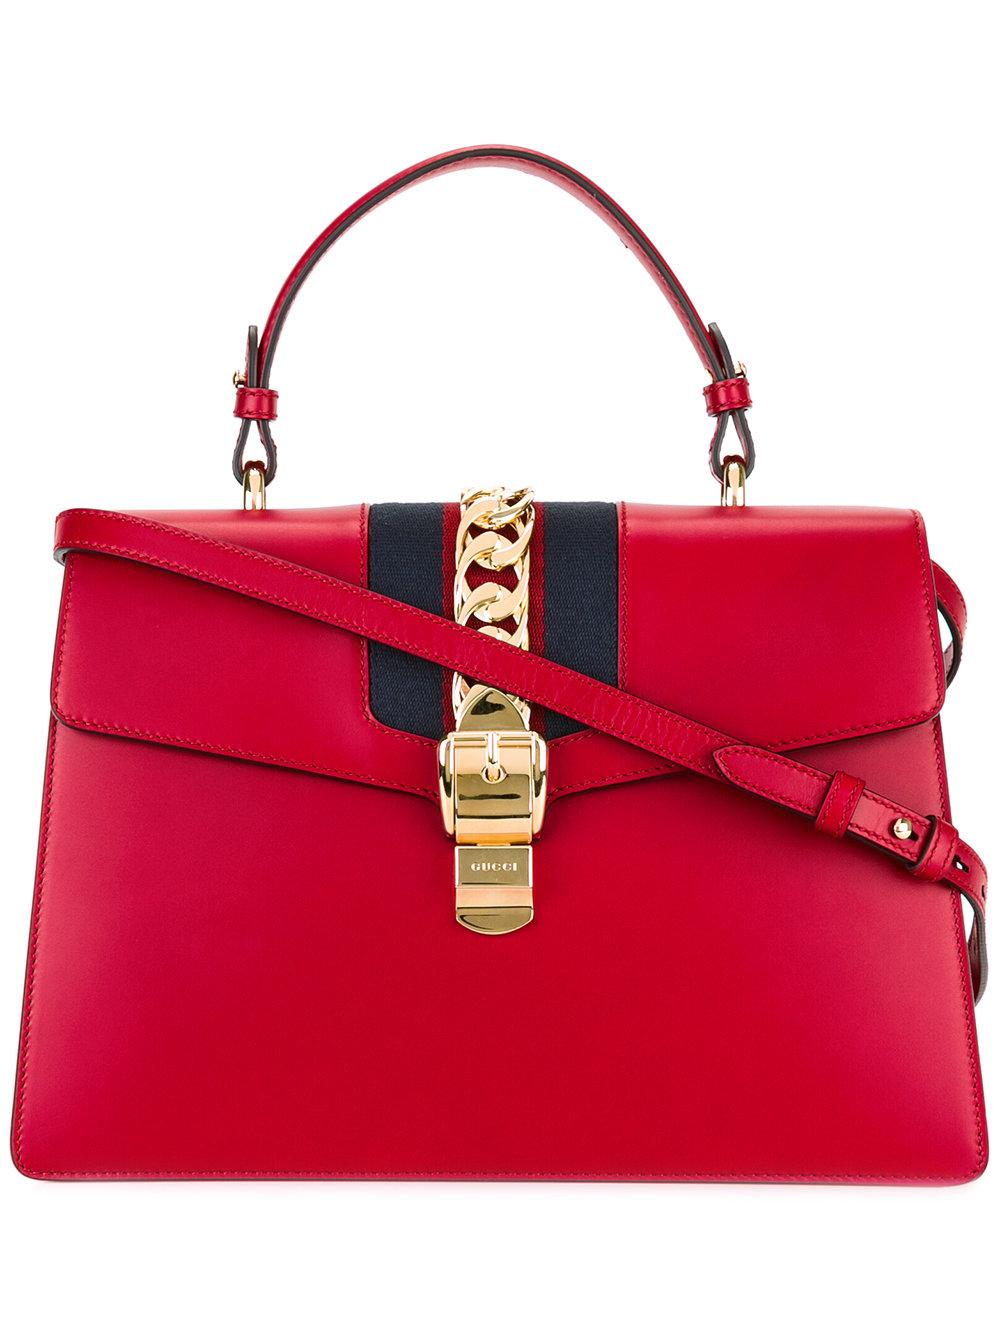 Gucci Sylvie Shoulder Bag in Red - Lyst